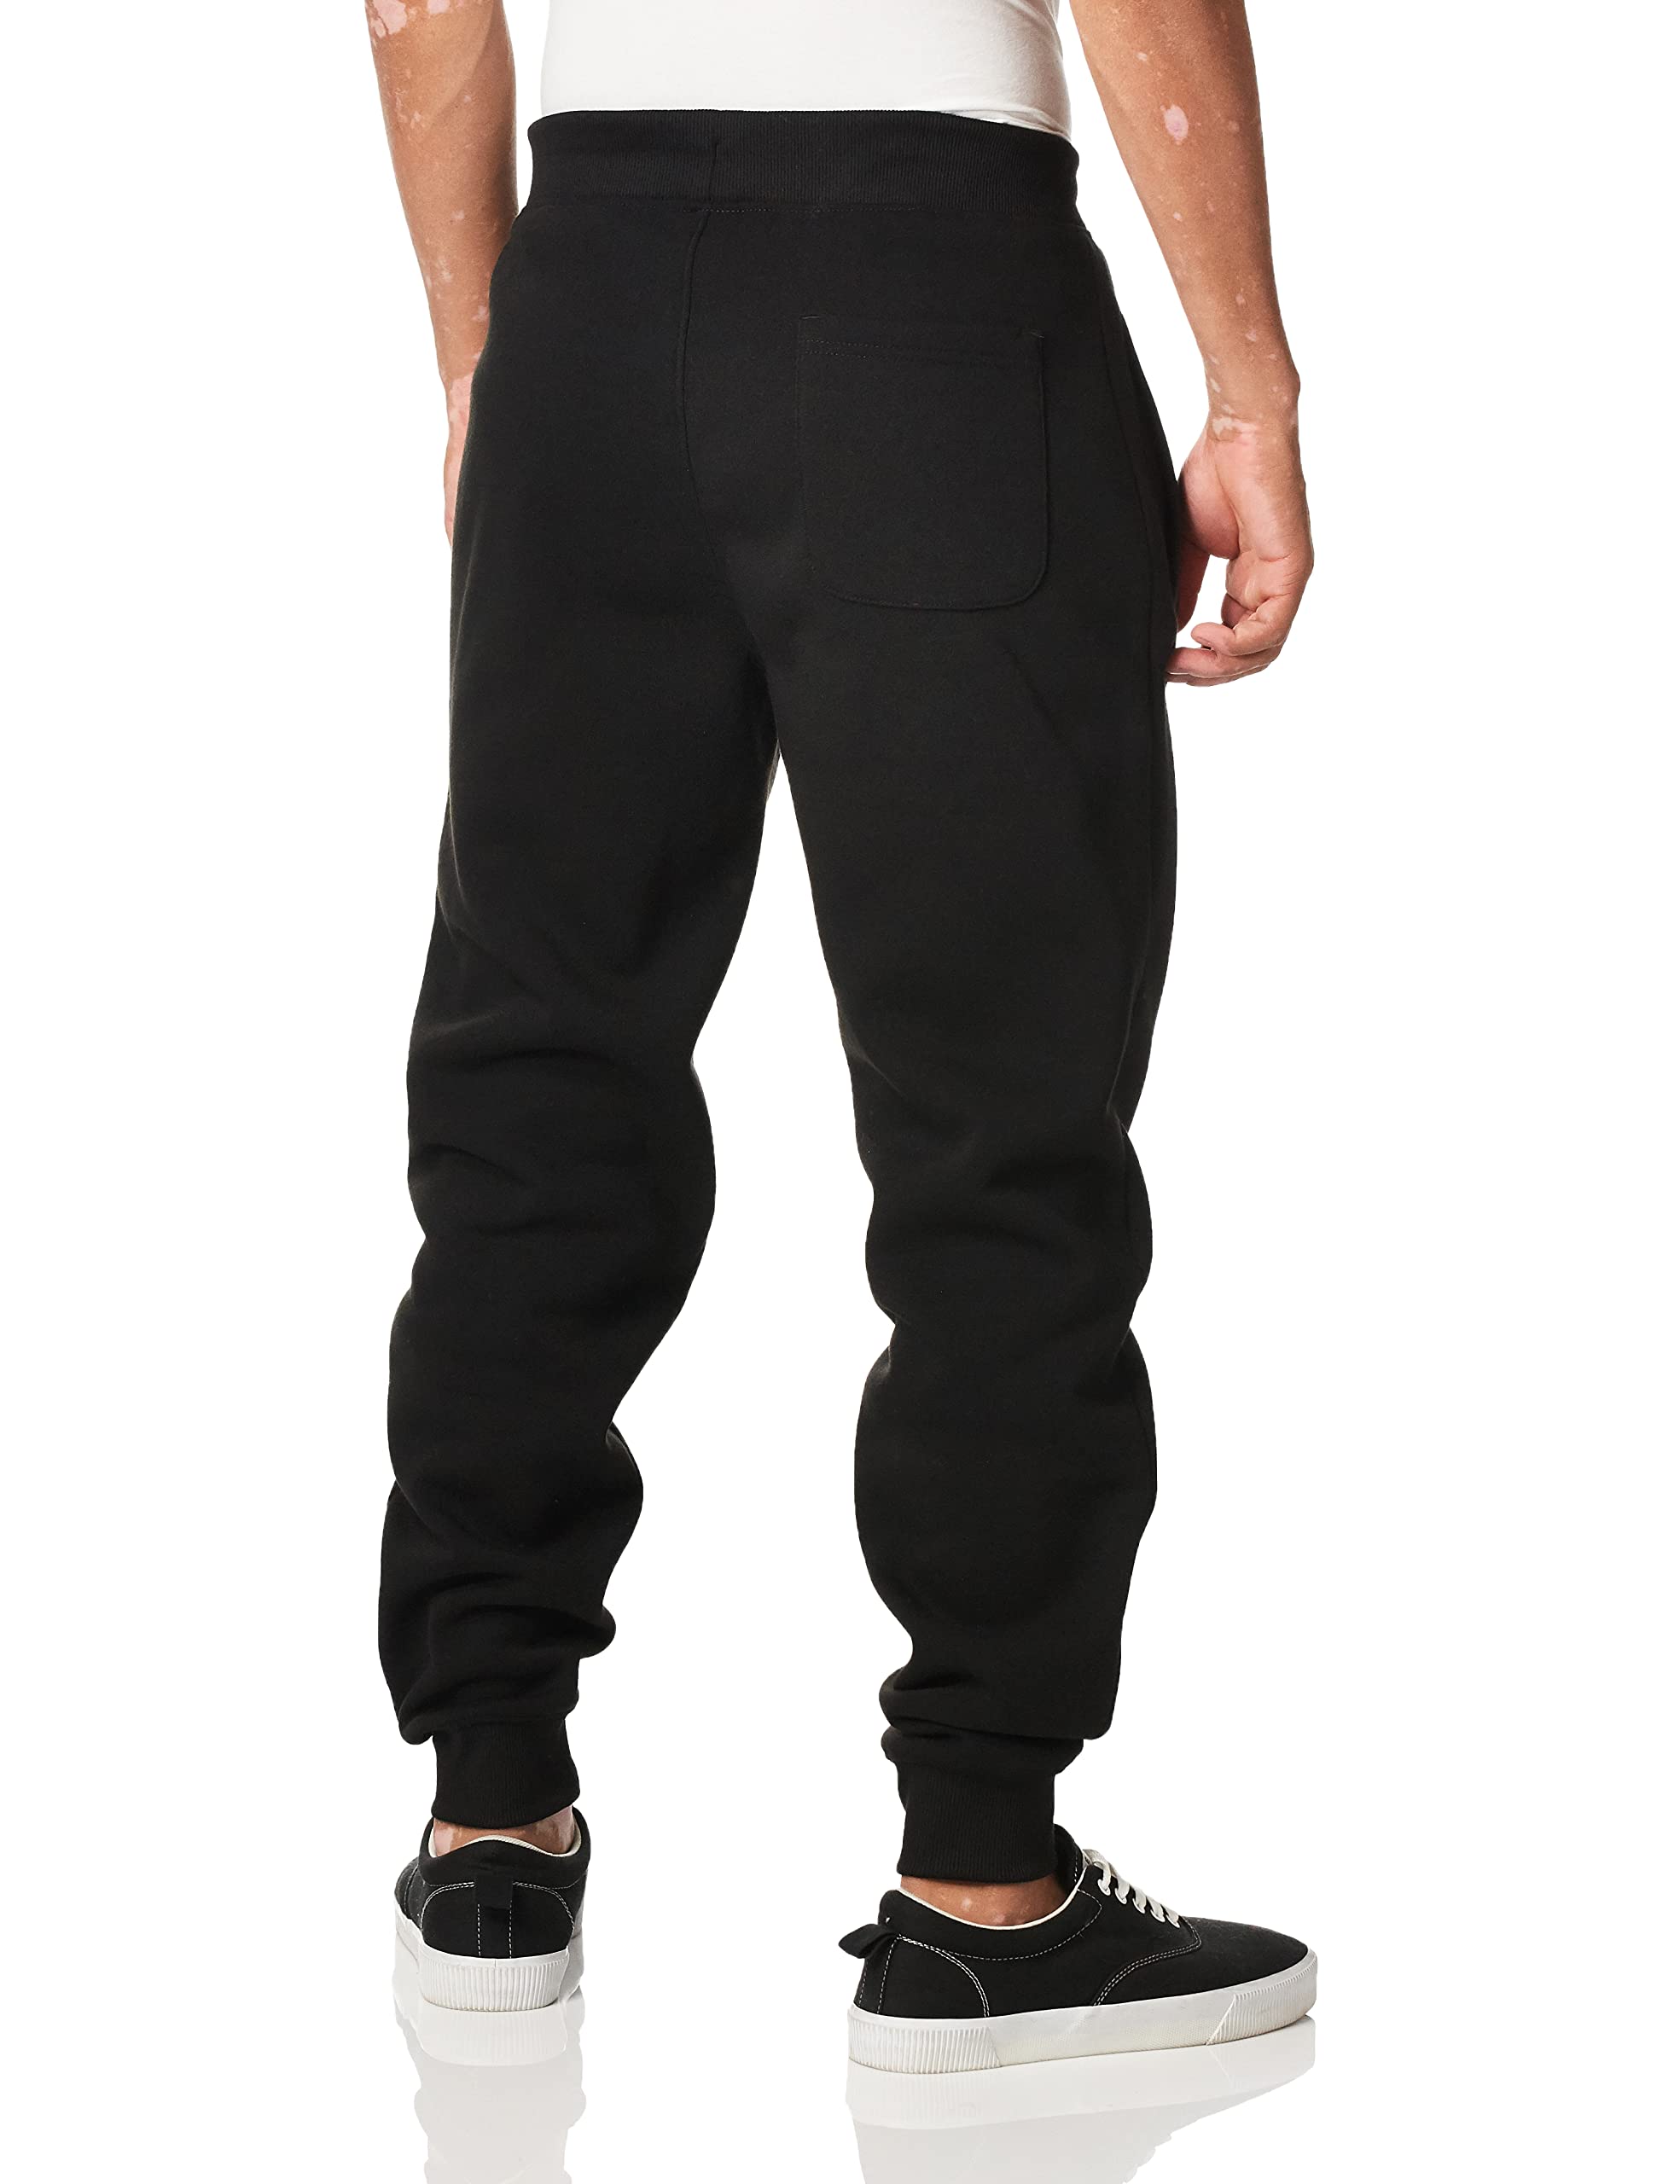 Southpole Men's Basic Active Fleece Jogger Pants-Regular and Big & Tall Sizes, BK (A), S